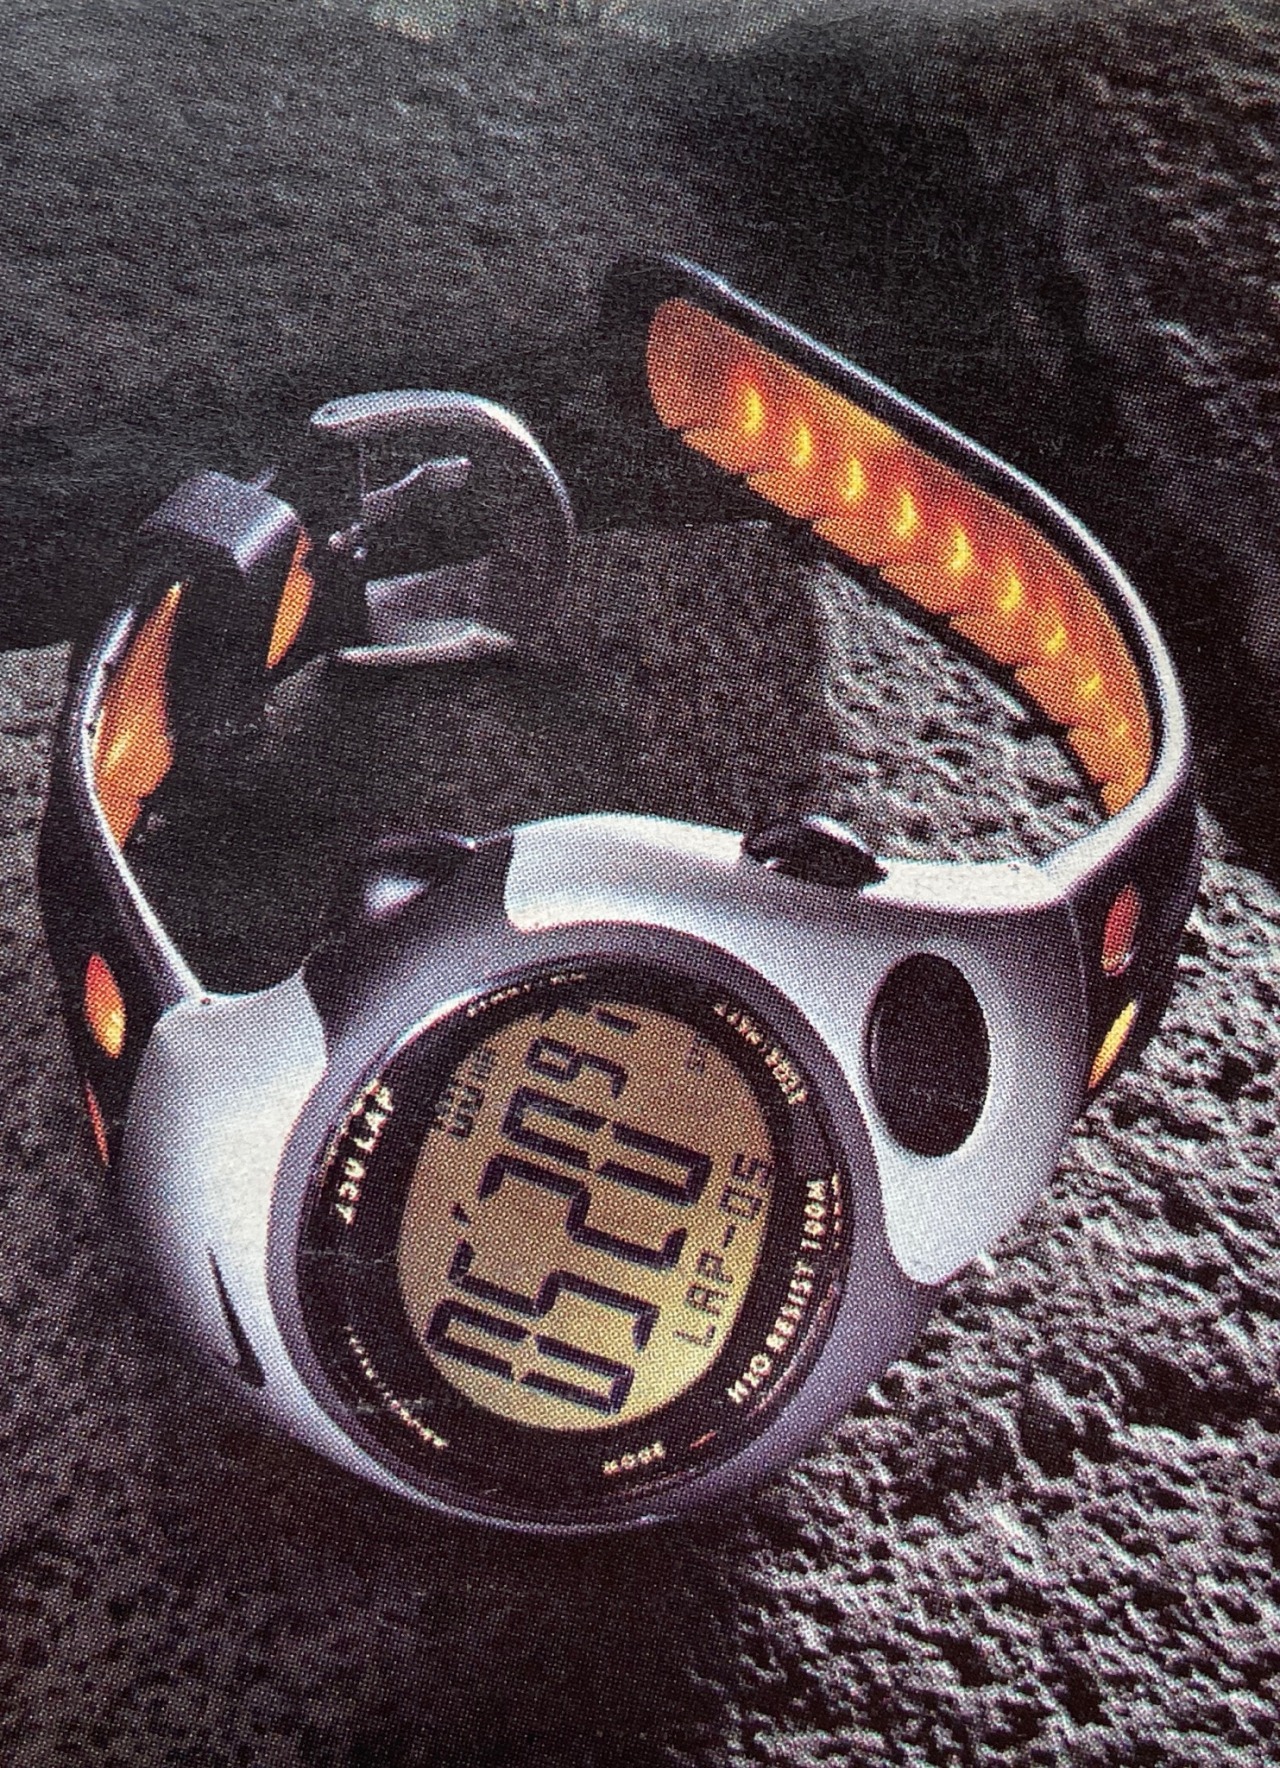 image Nike: Triax 250 Running (1998)